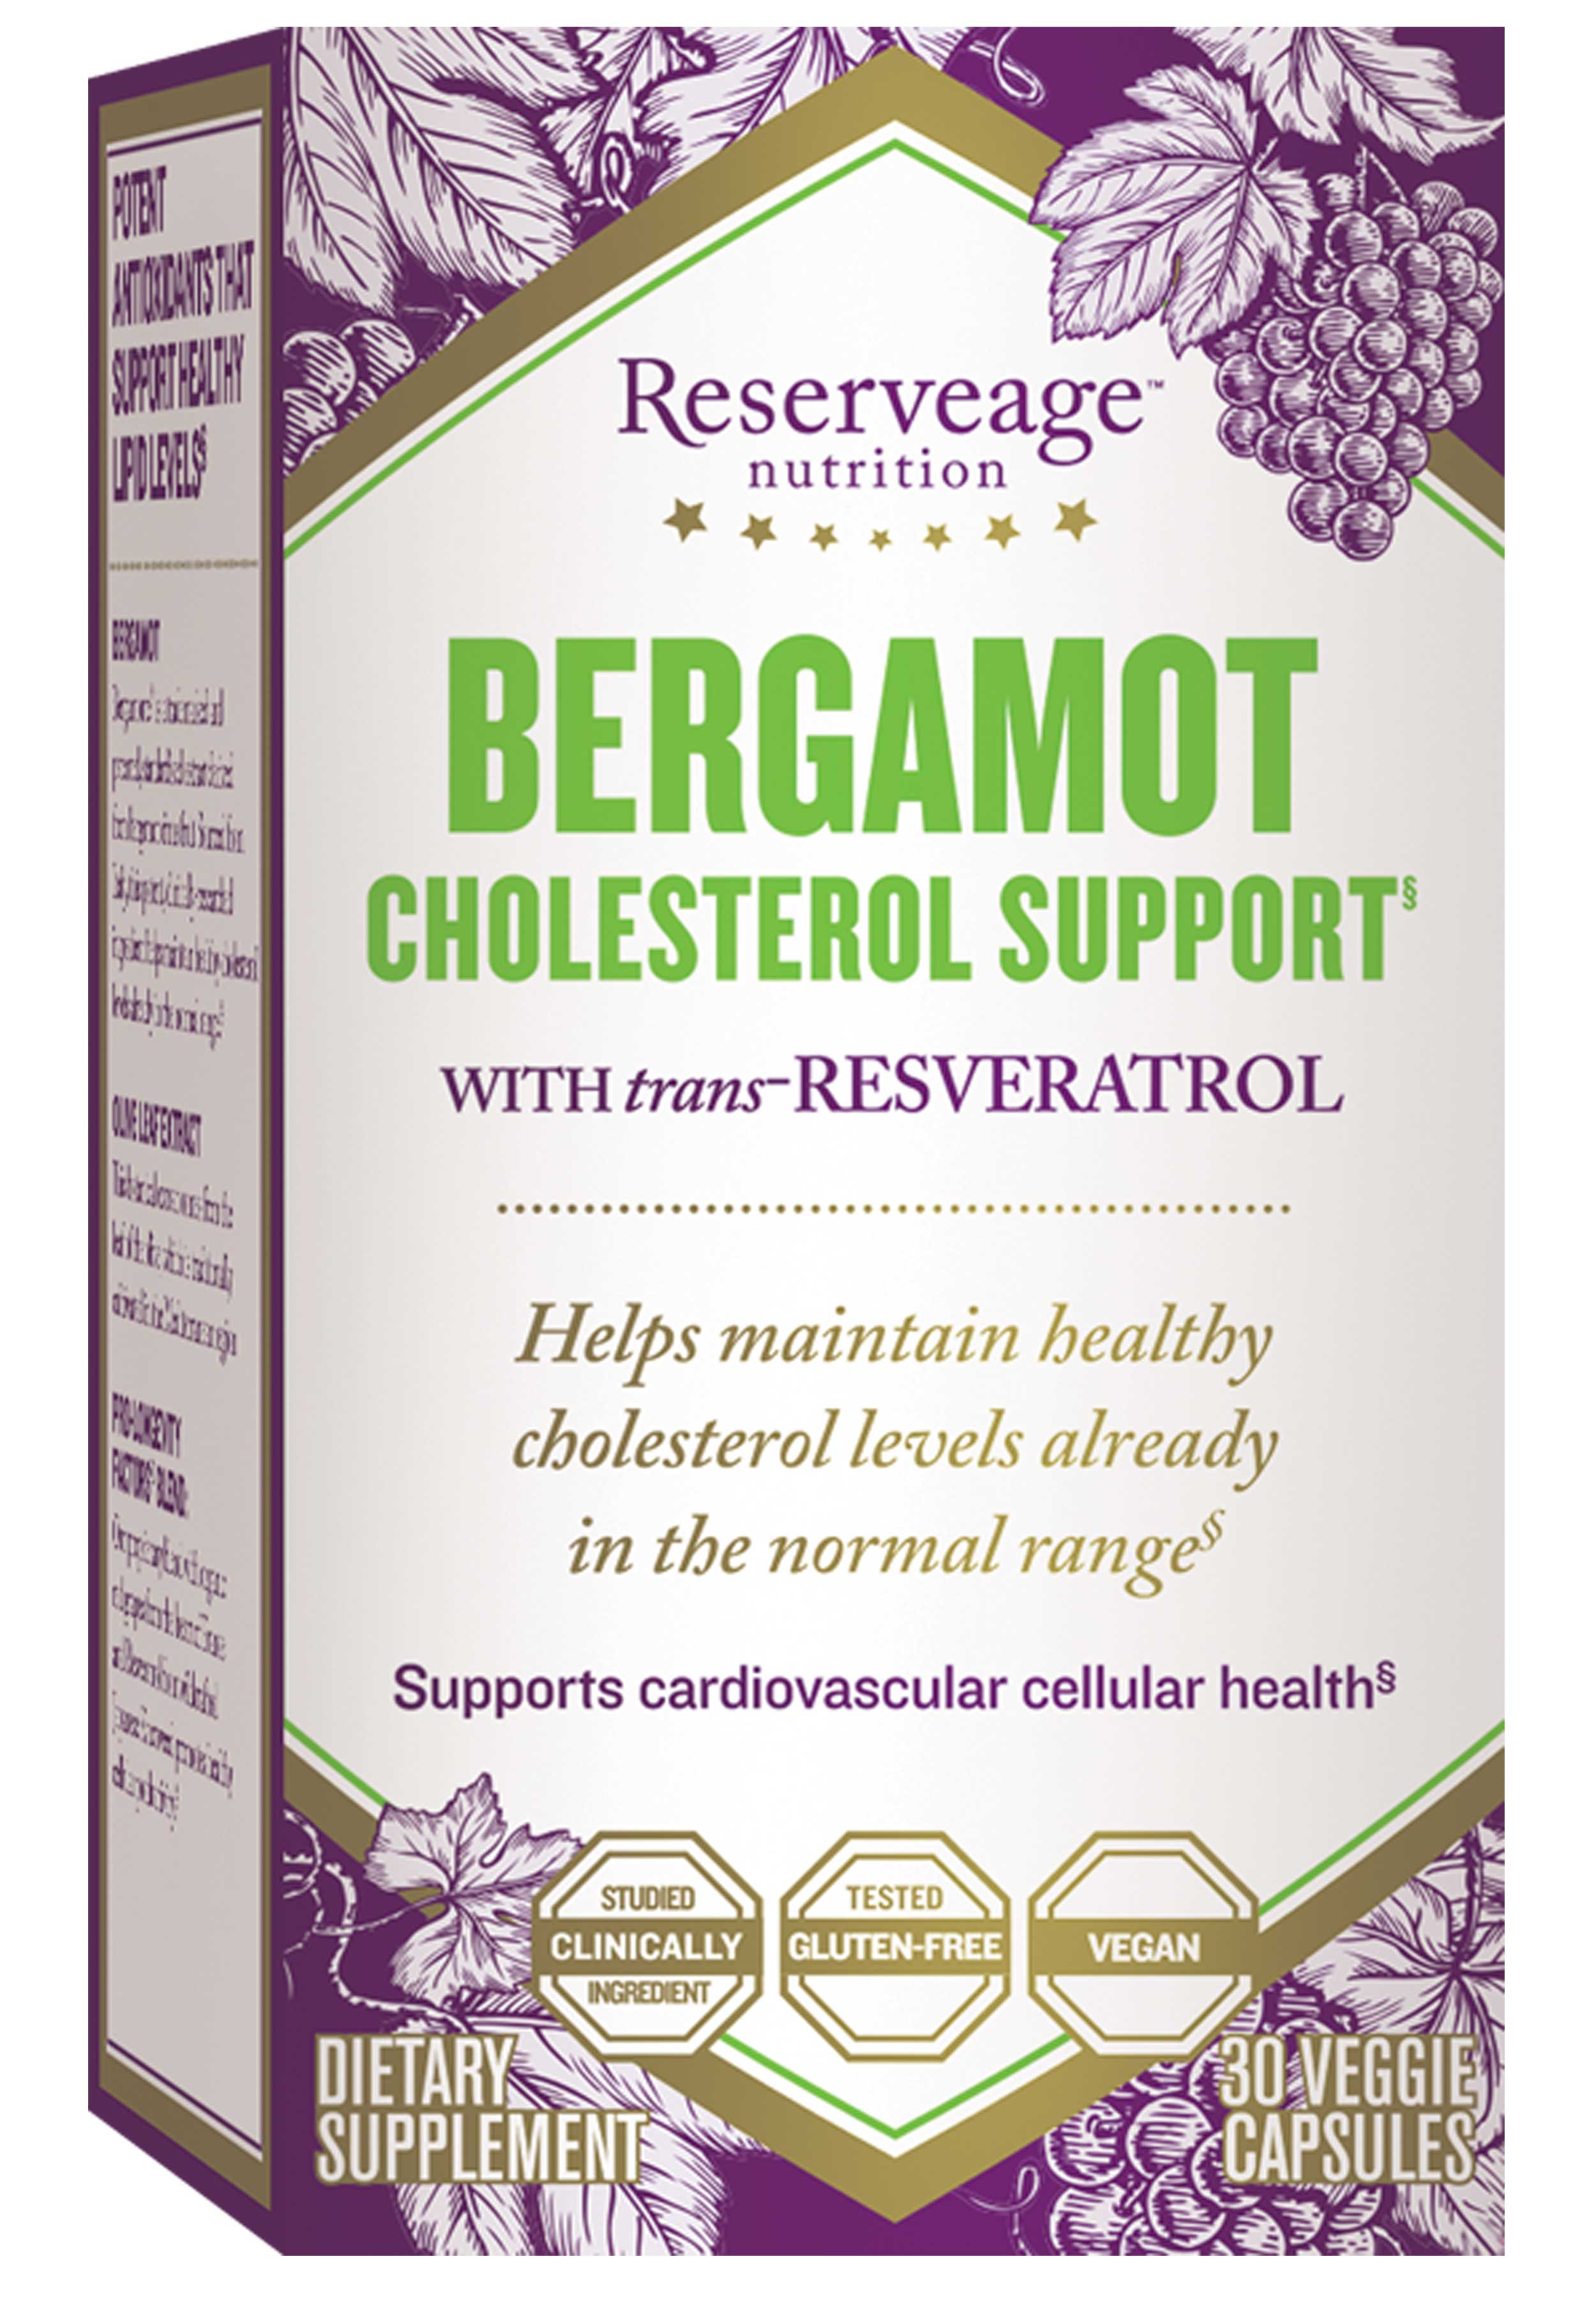 Reserveage Bergamot Cholesterol Support With Trans Resveratrol